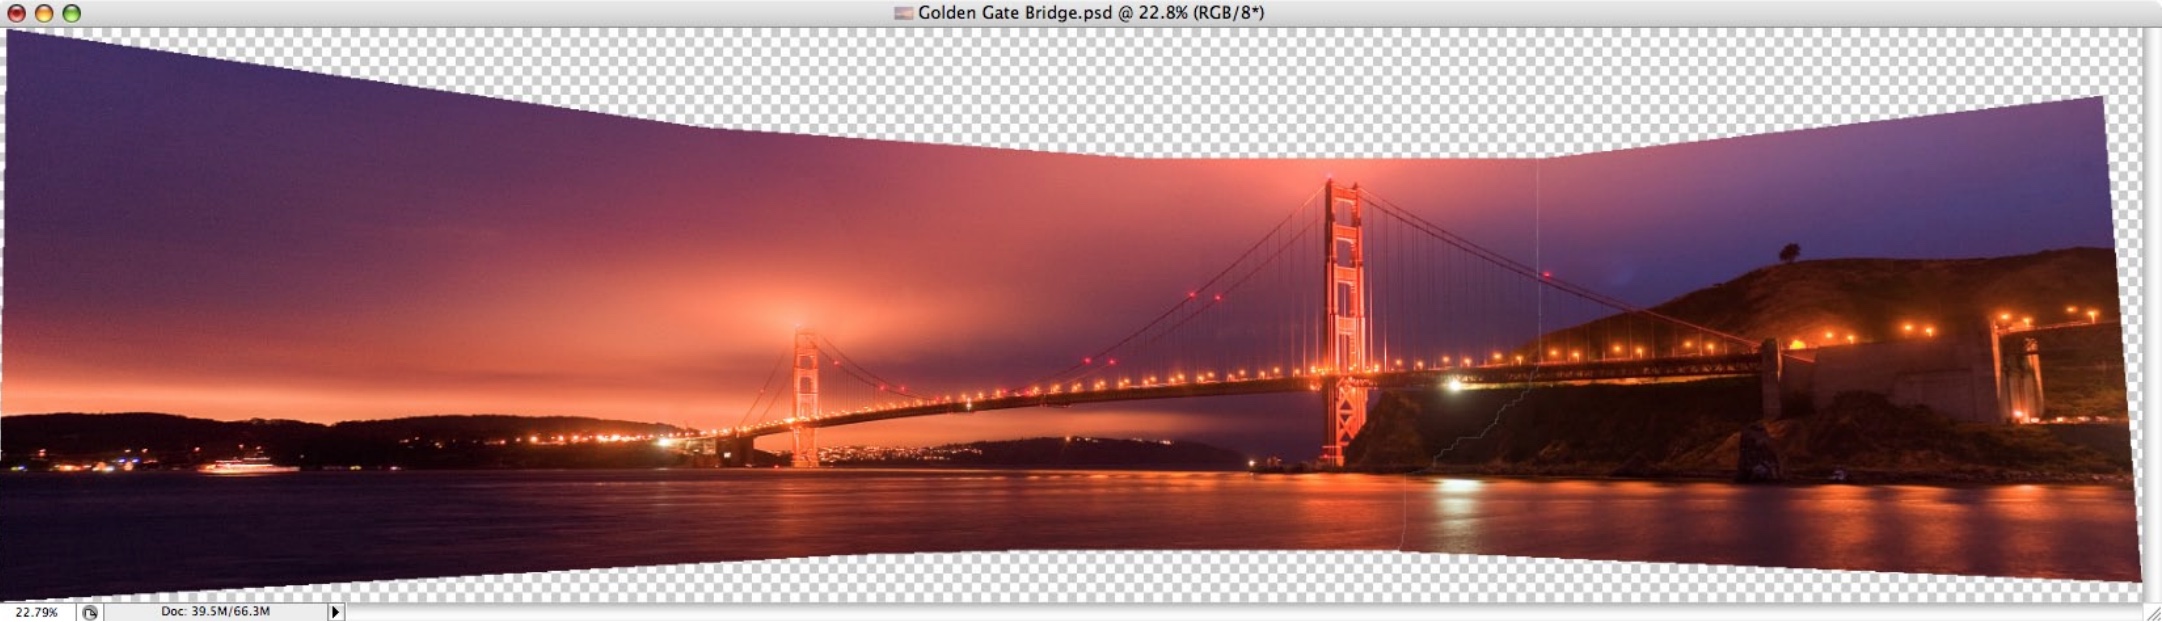 Adobe photoshop plugins download